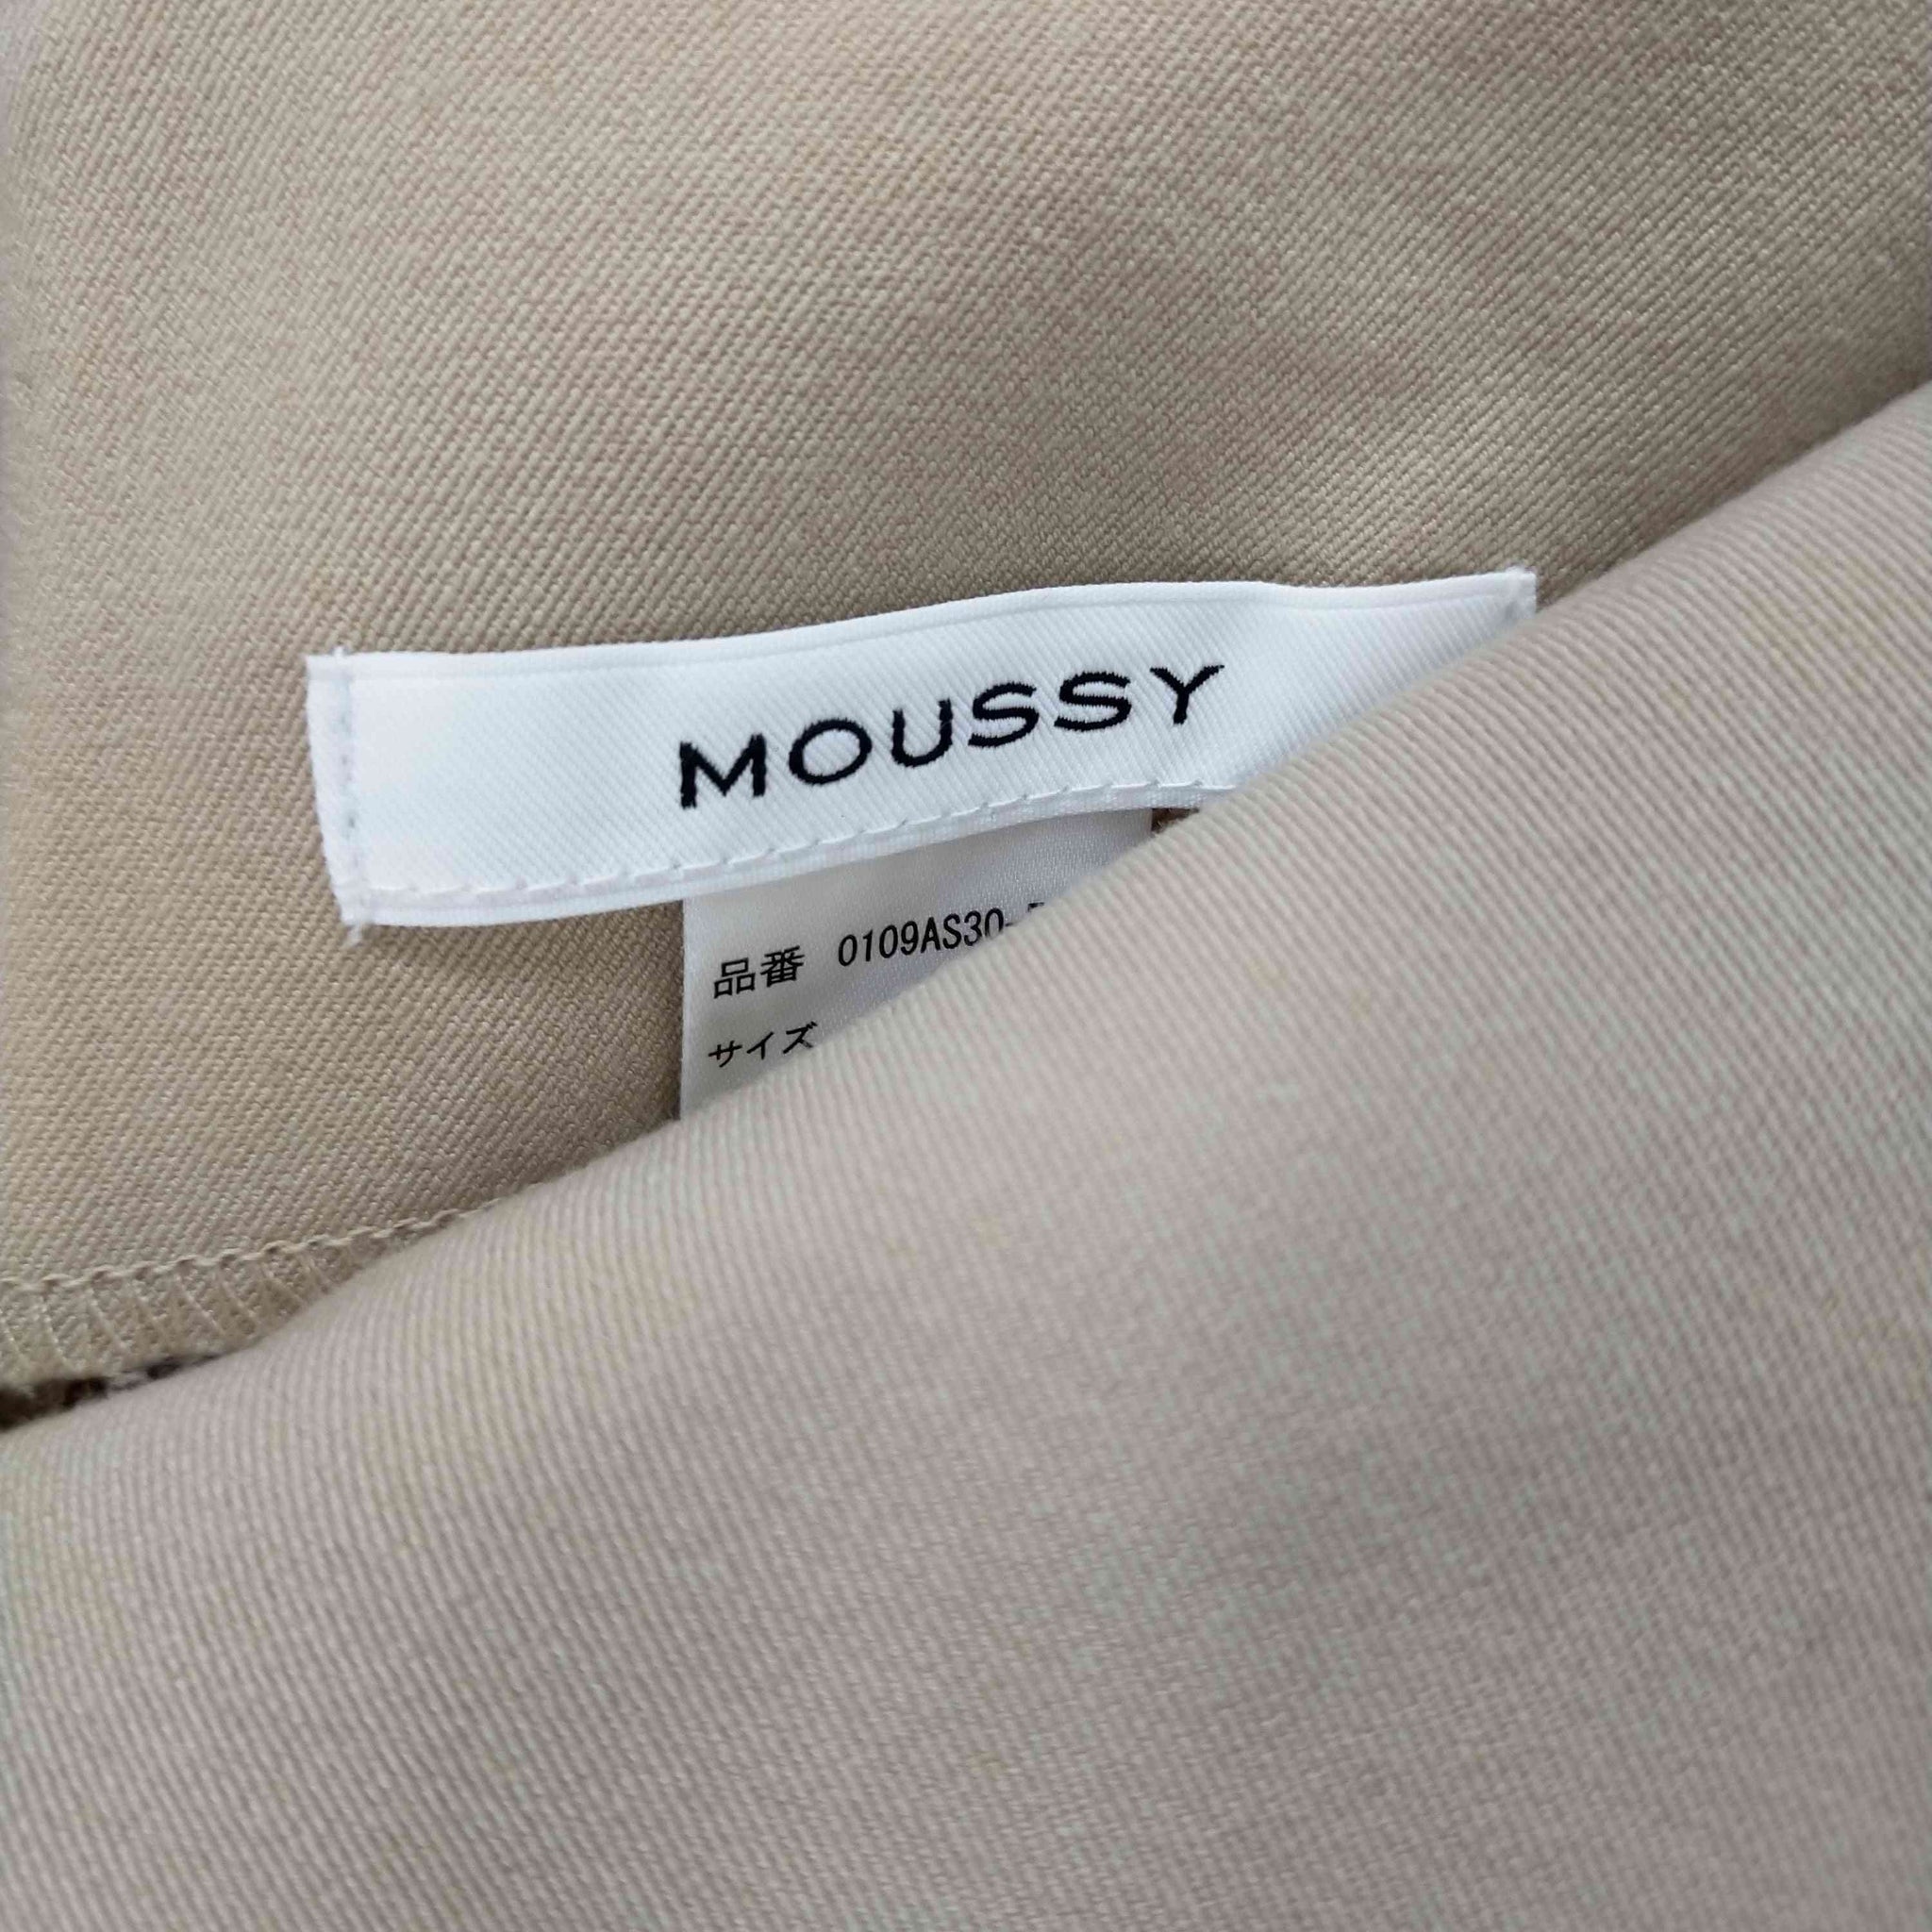 moussy(マウジー)TIE WAIST SKIRT F